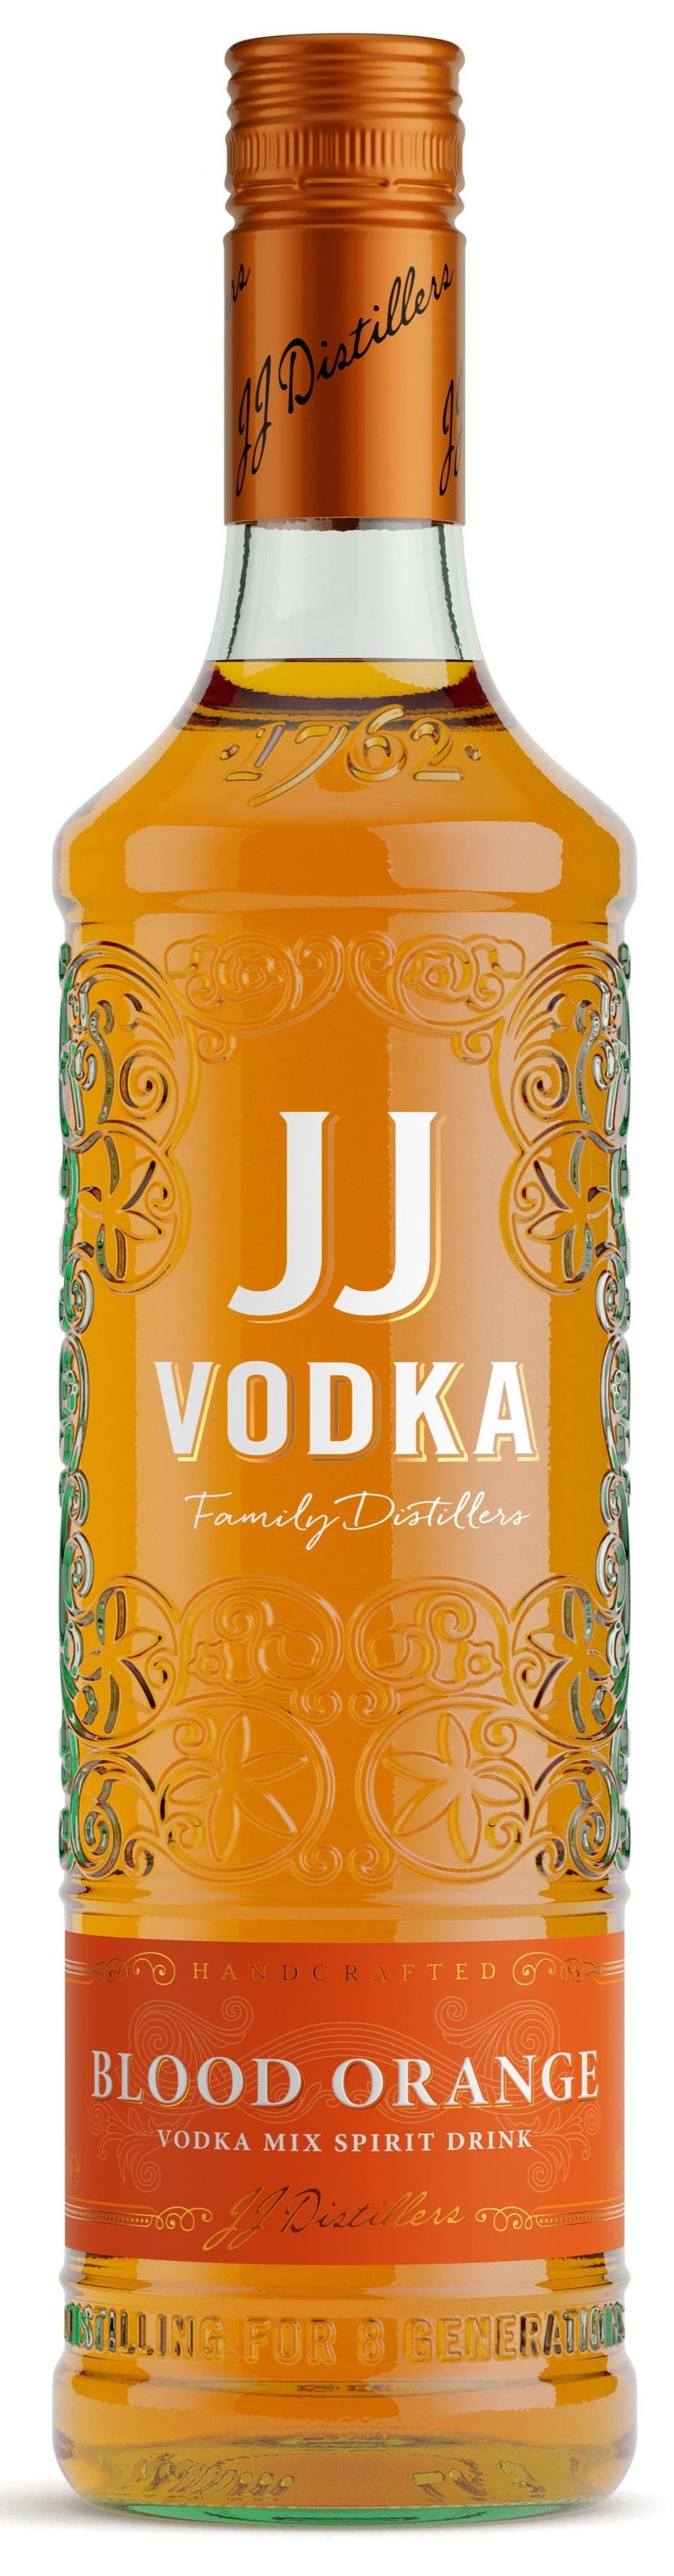 J.J. Whitley Blood Orange Vodka 70cl